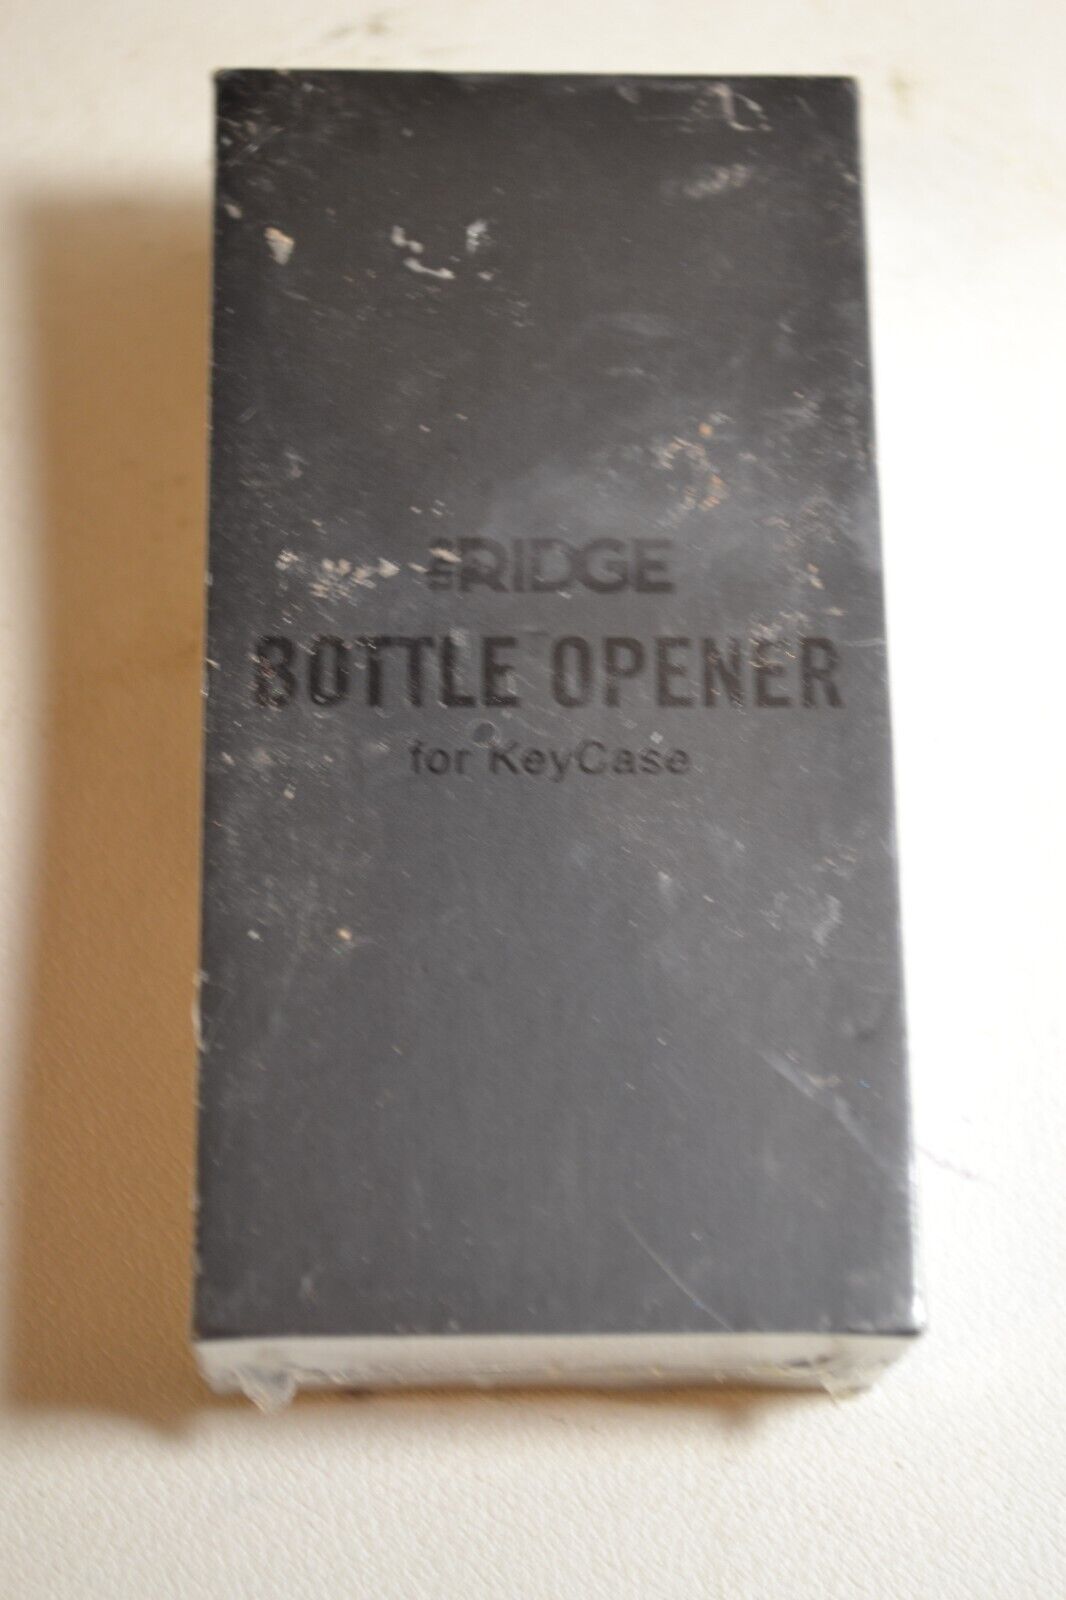 The Ridge Bottle Opener For KeyCase Titanium R149